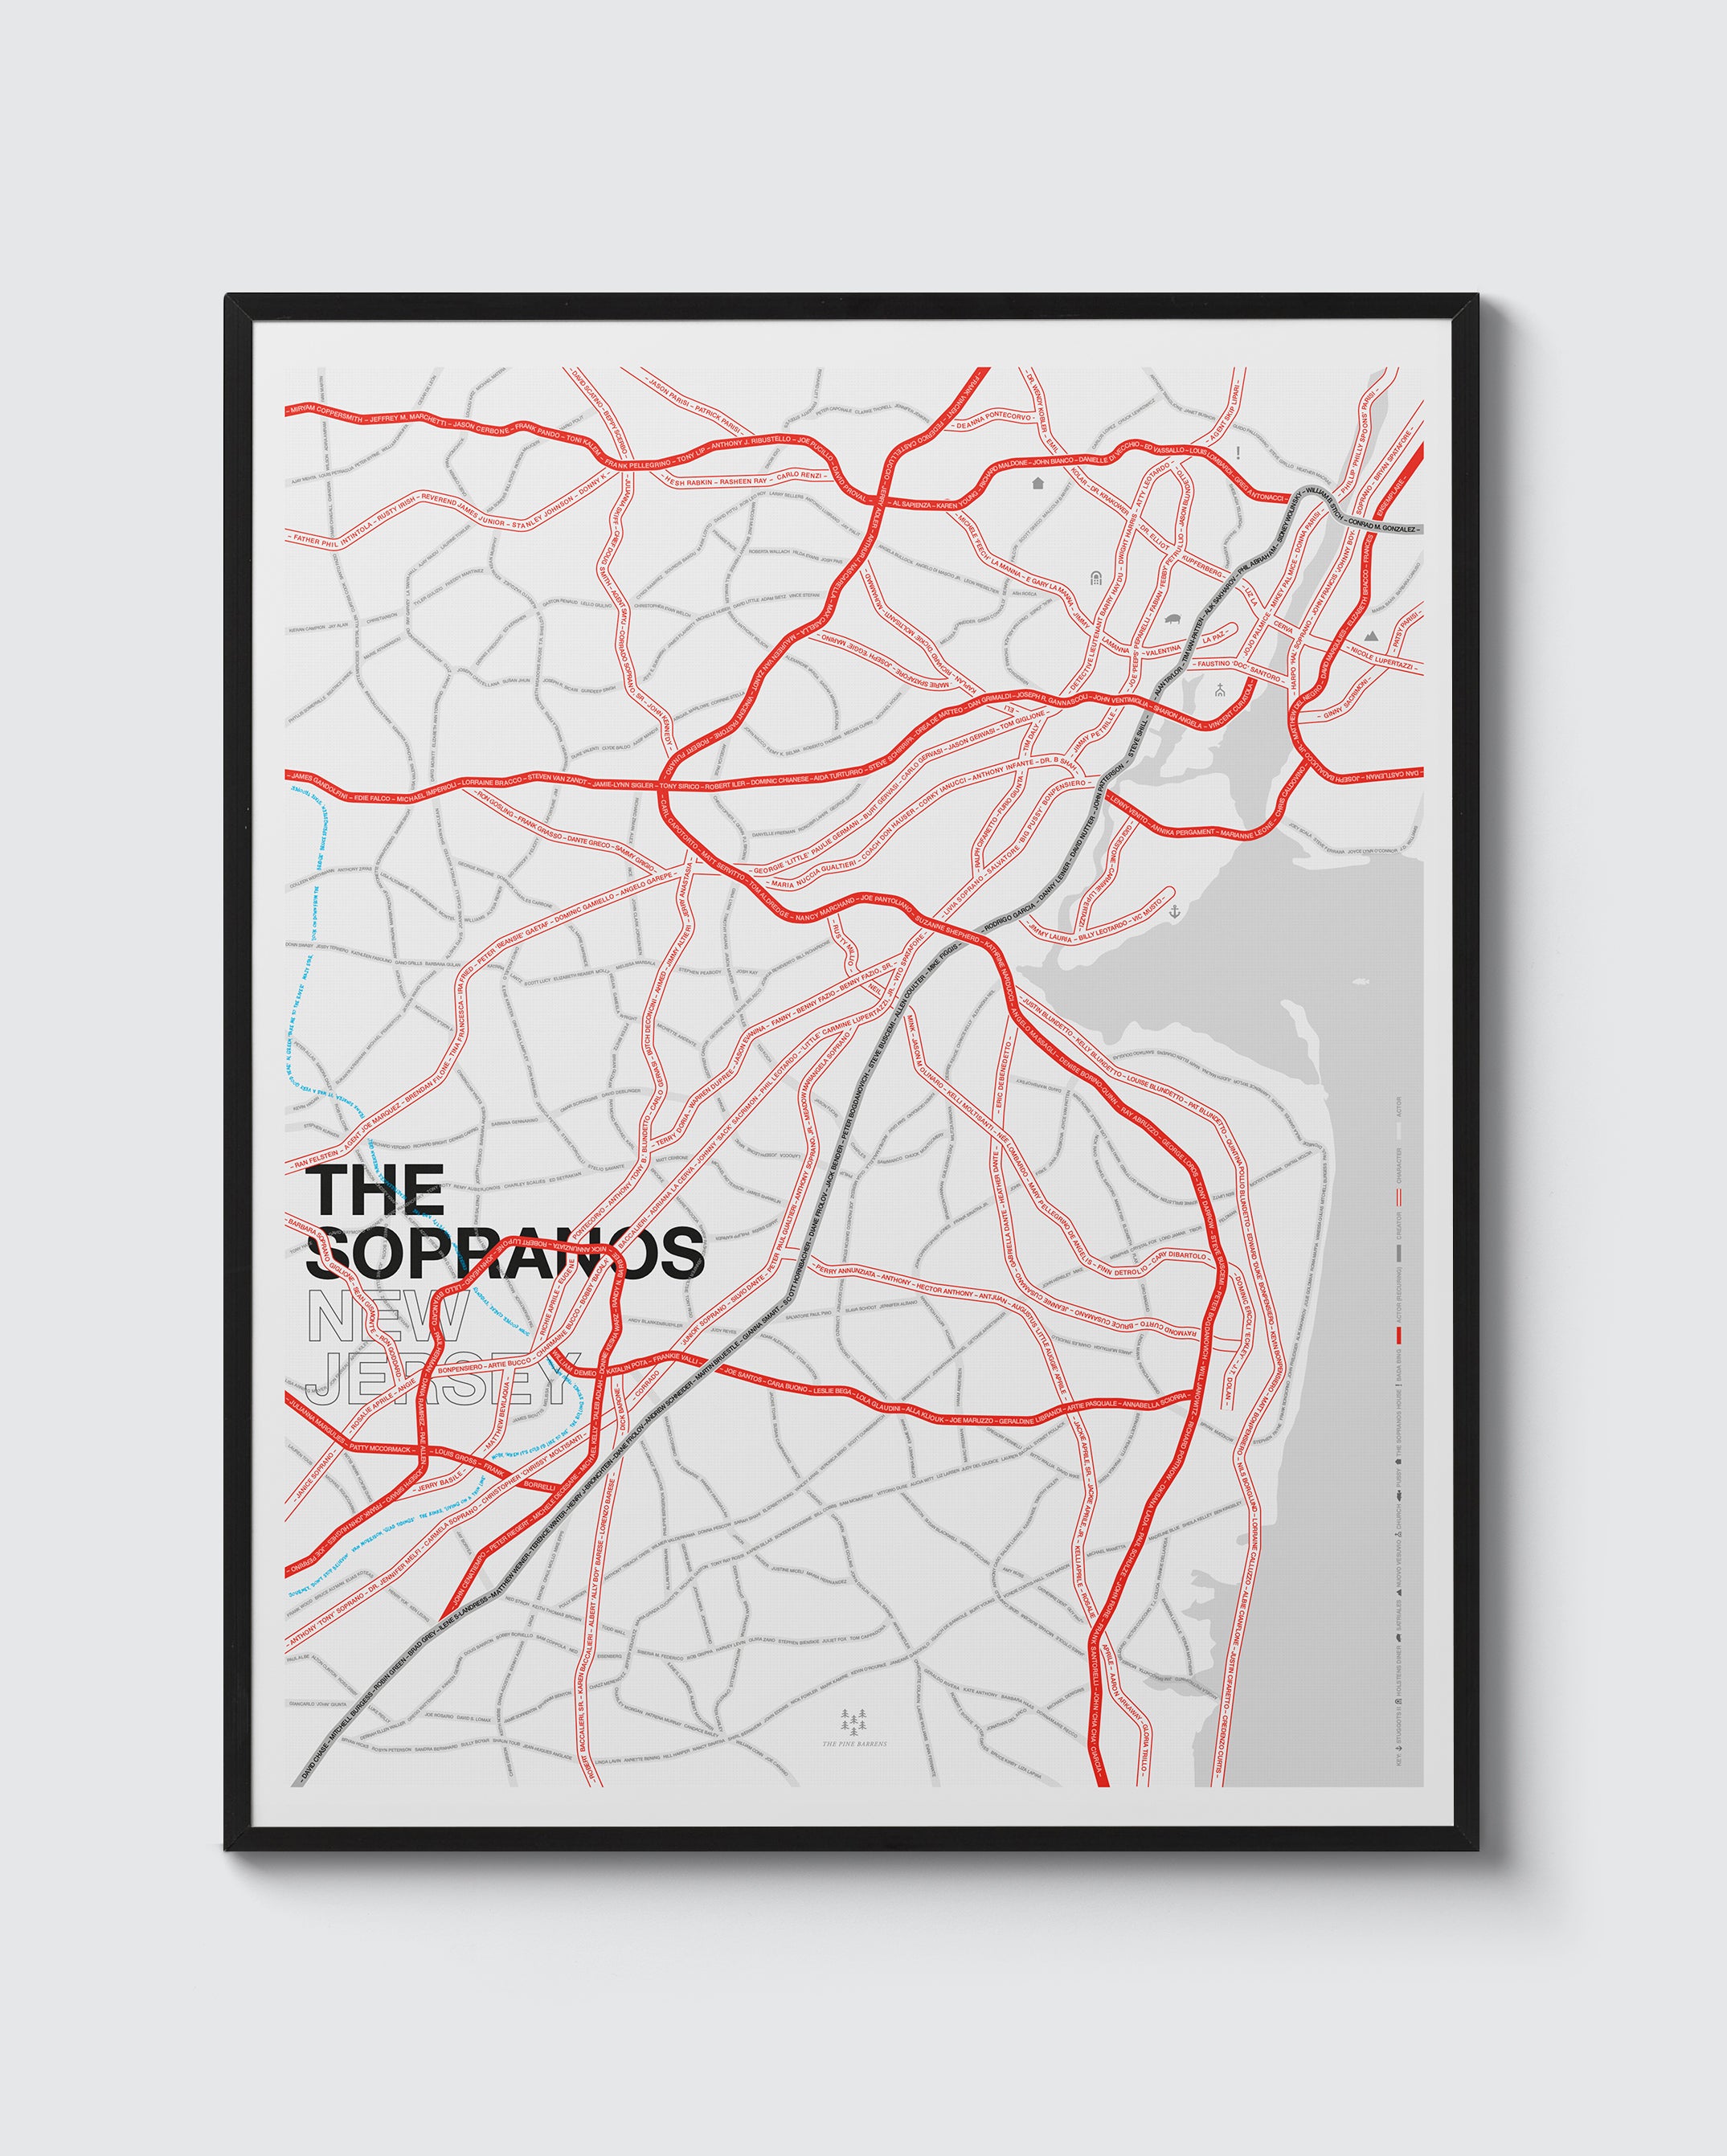 Sopranos, New Jersey – Day print